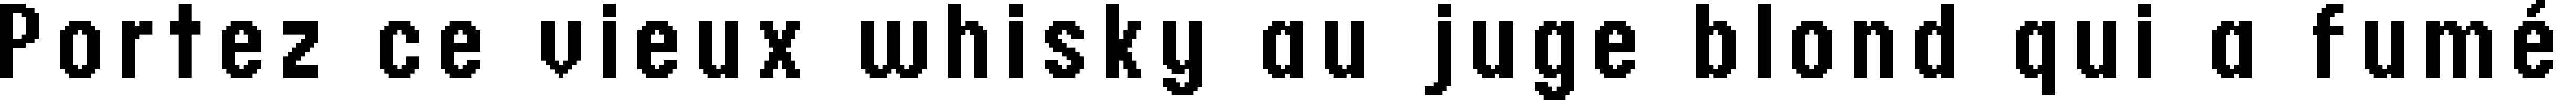 Пример написания шрифтом header 17_68 текста на французском